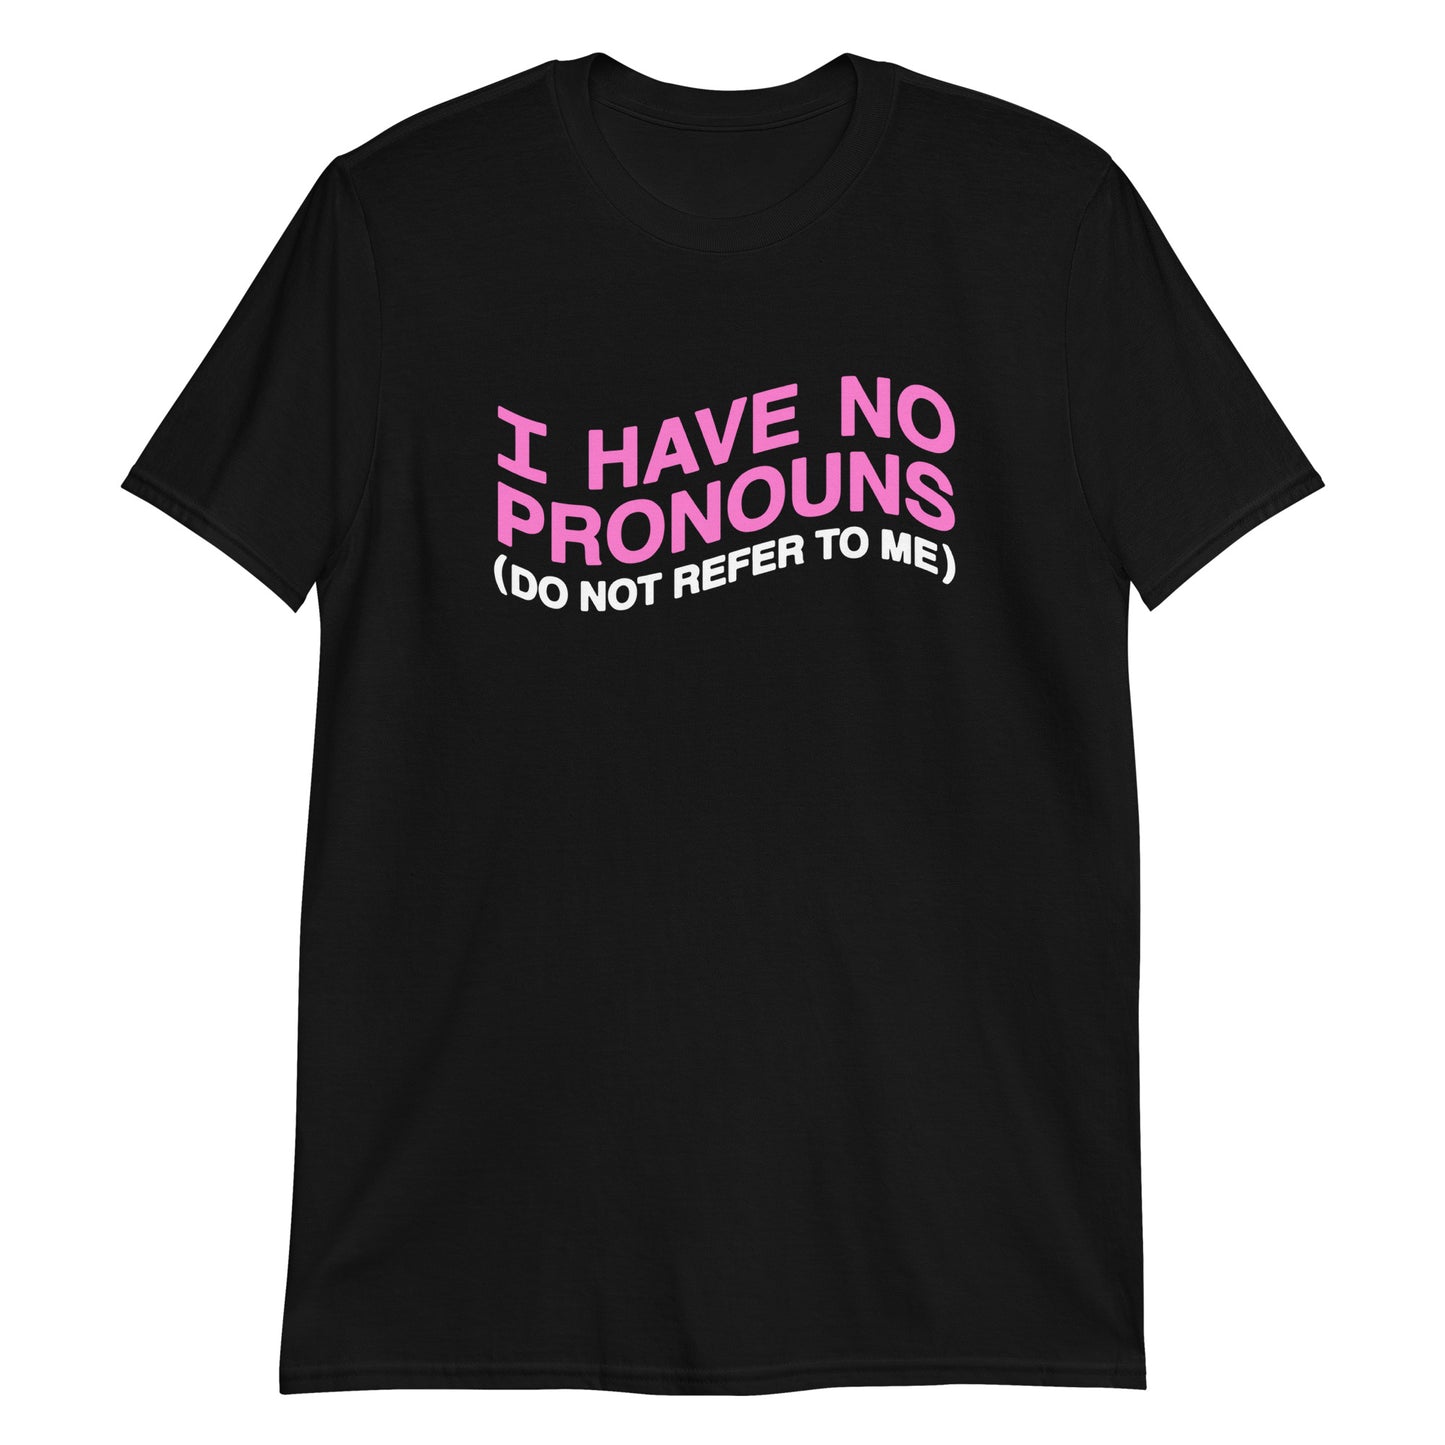 I have no pronouns (do not refer to me).